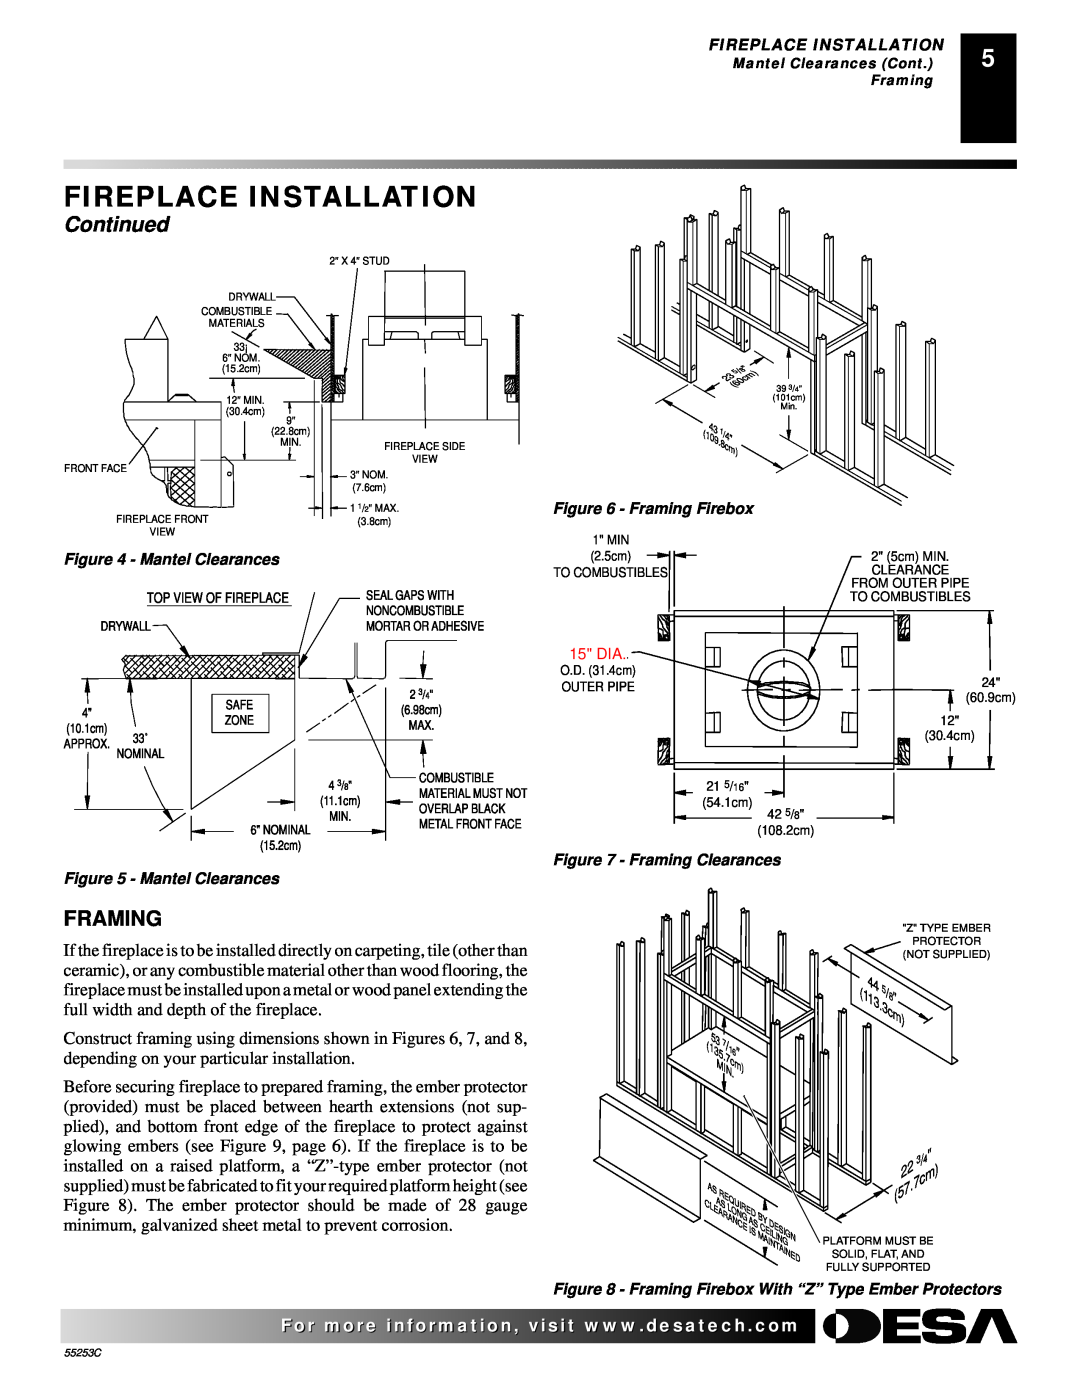 Desa V3610ST manual Continued, Fireplace Installation, Framing 